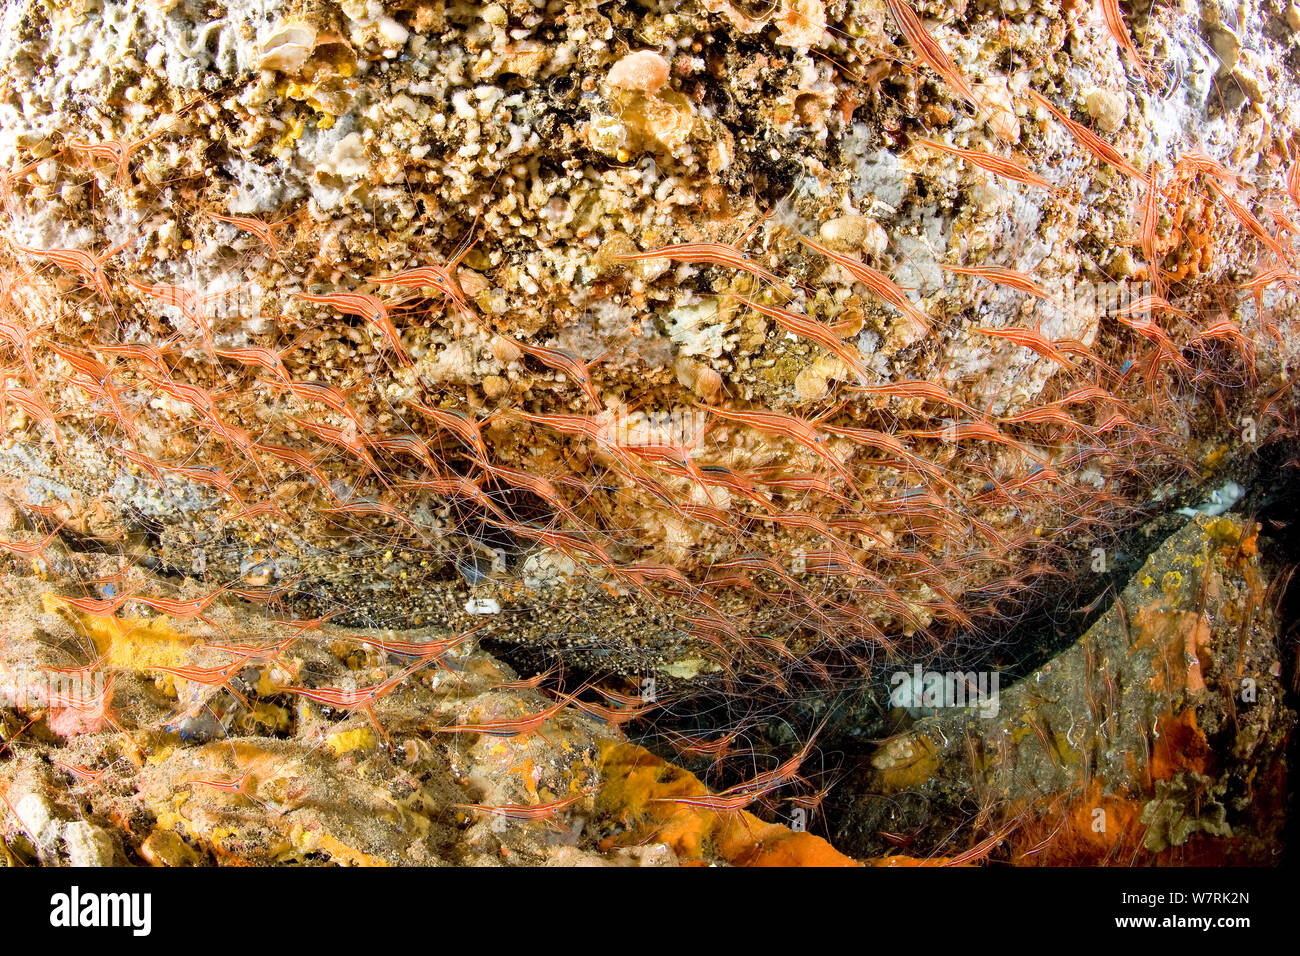 Narwal shrimp (Plesionika narval) in cave, Ischia Island, Italy, Tyrrhenian Sea, Mediterranean Stock Photo